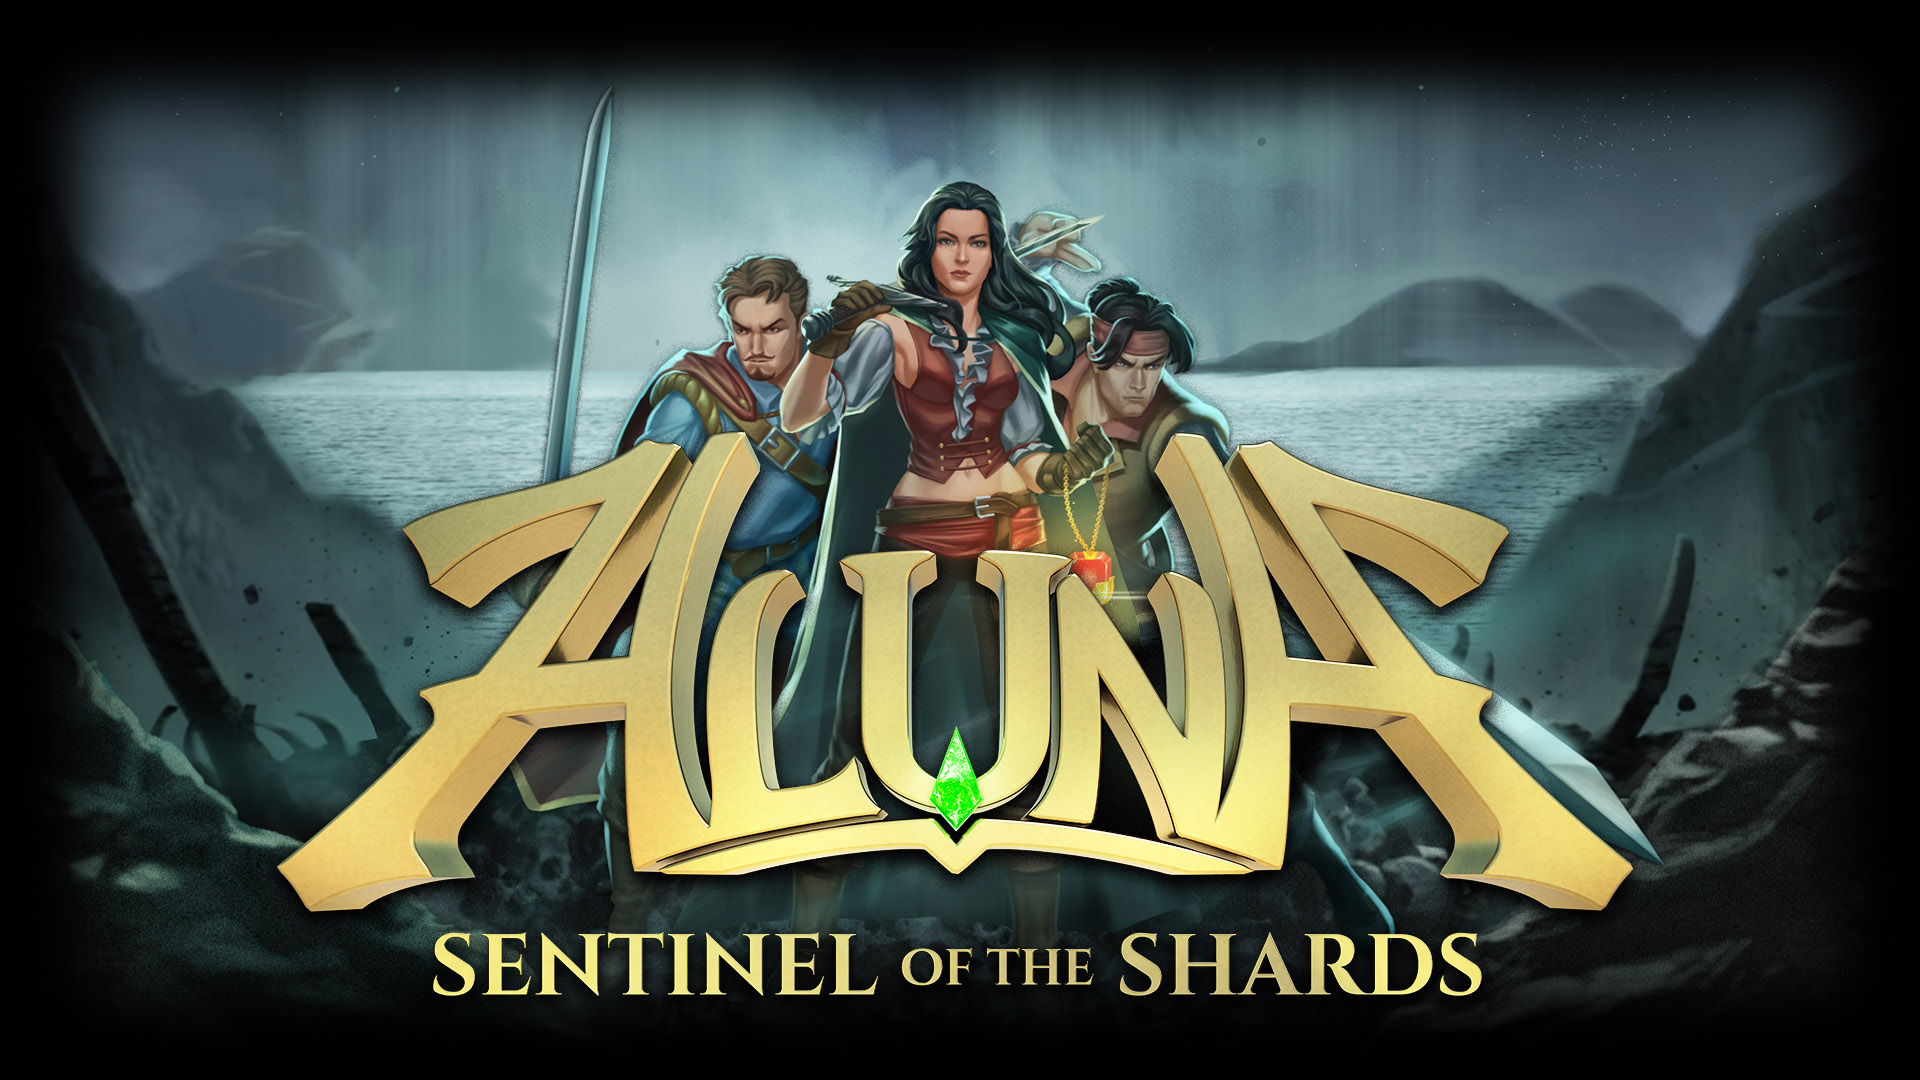 Aluna: Sentinal of the Shards - Paula Garces